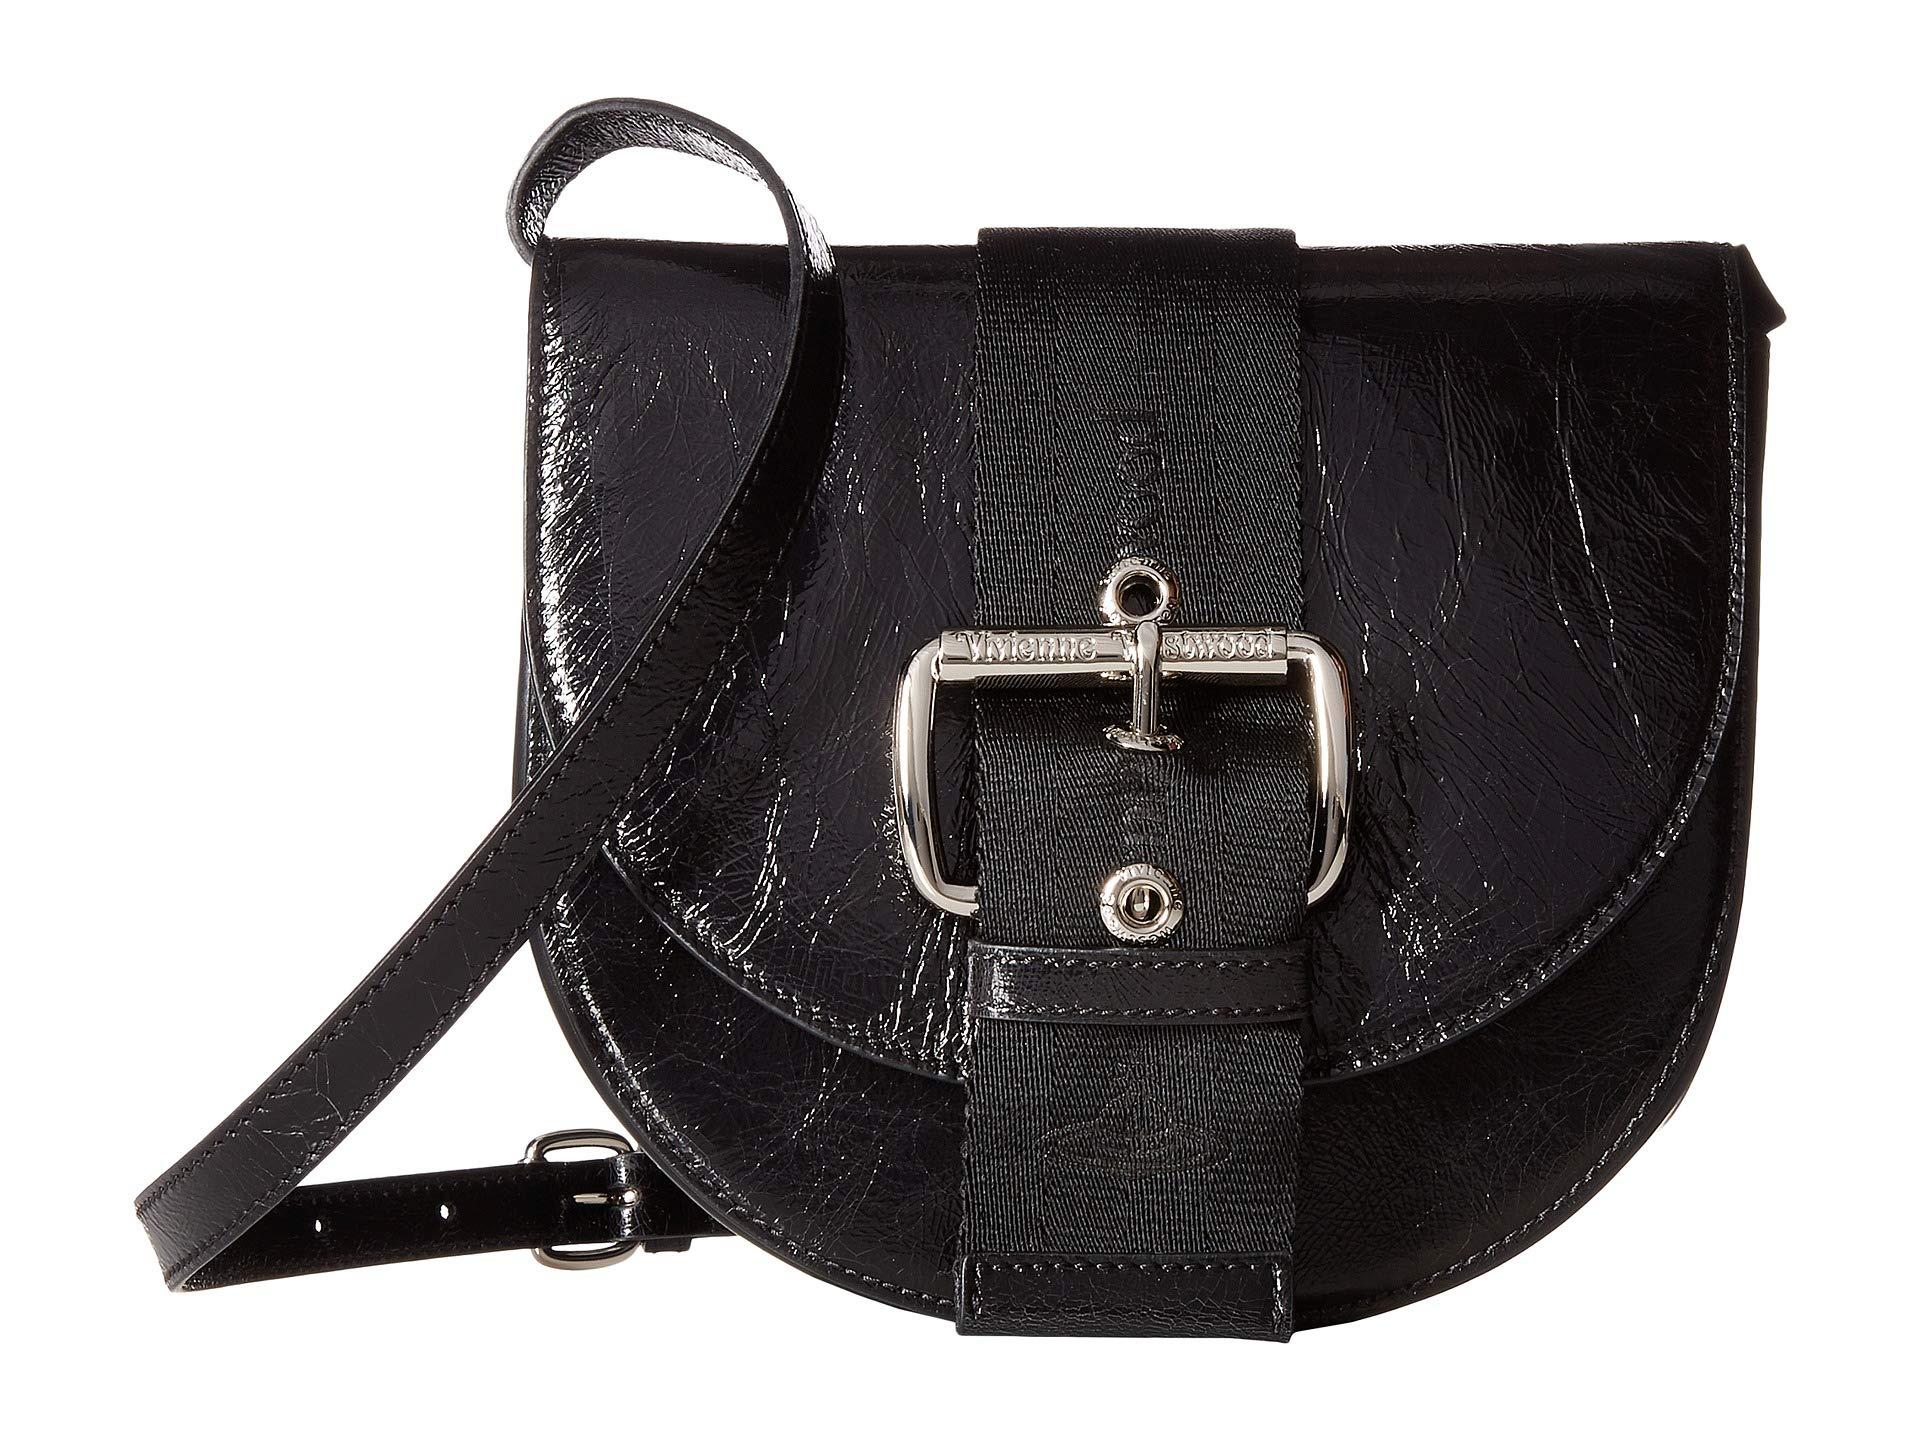 Vivienne Westwood Leather Alex Saddle Bag in Black - Lyst